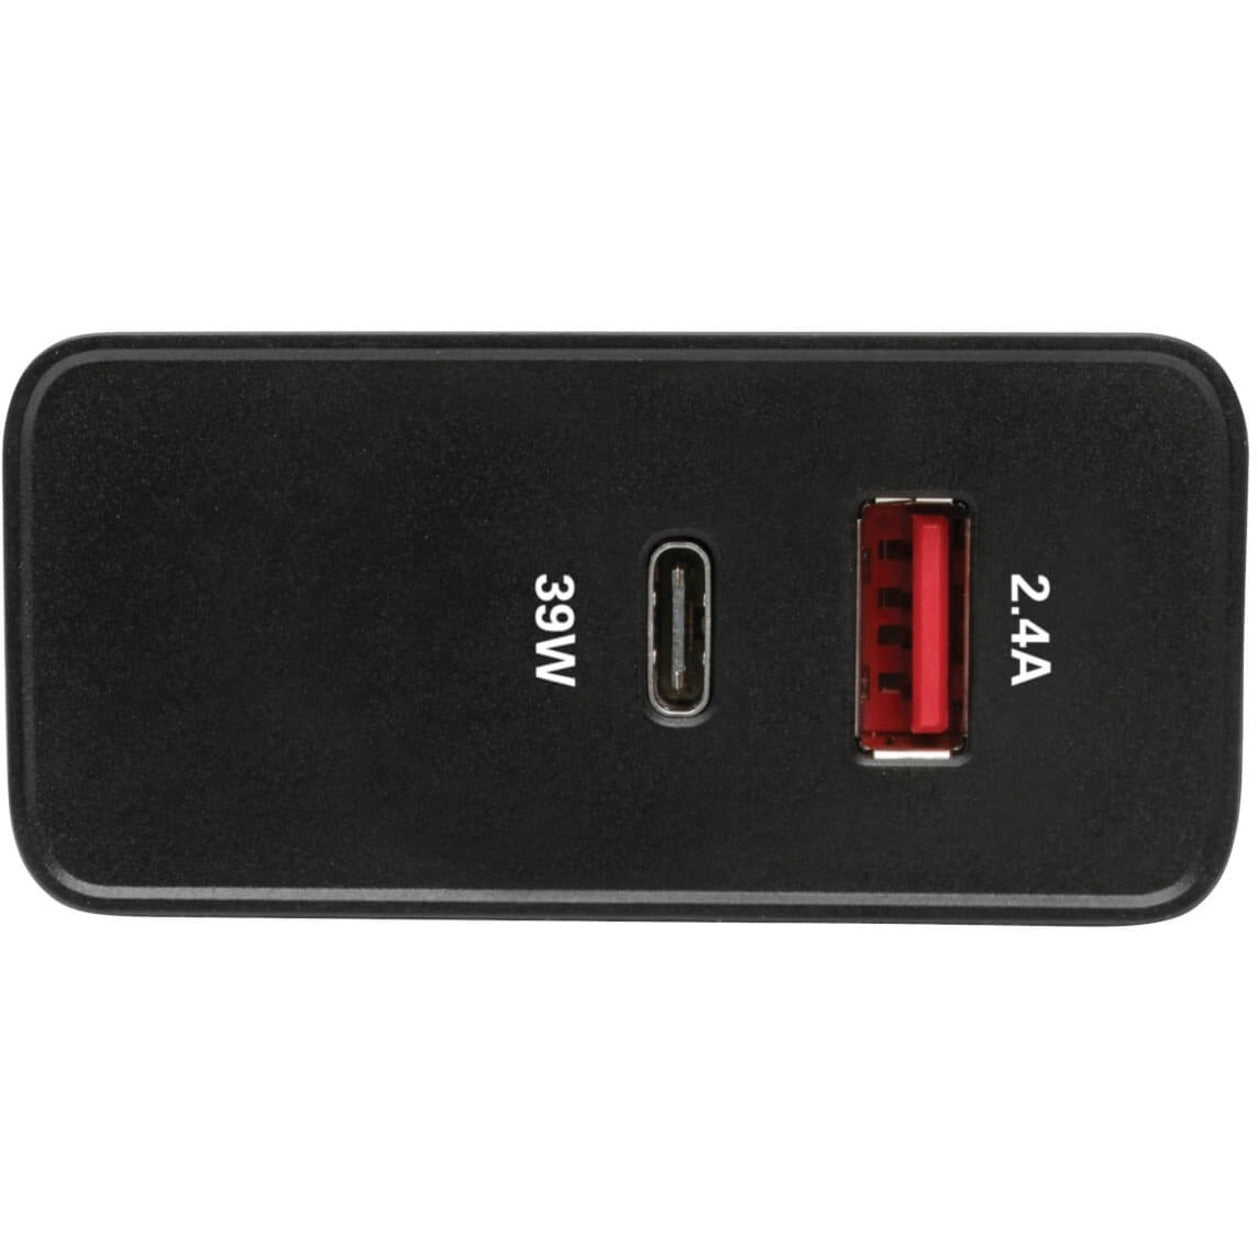 Tripp Lite U280-W02-A1C1 AC Adapter 2PT USB Wall Charger with USB Type C 51W Power 2 Year Warranty